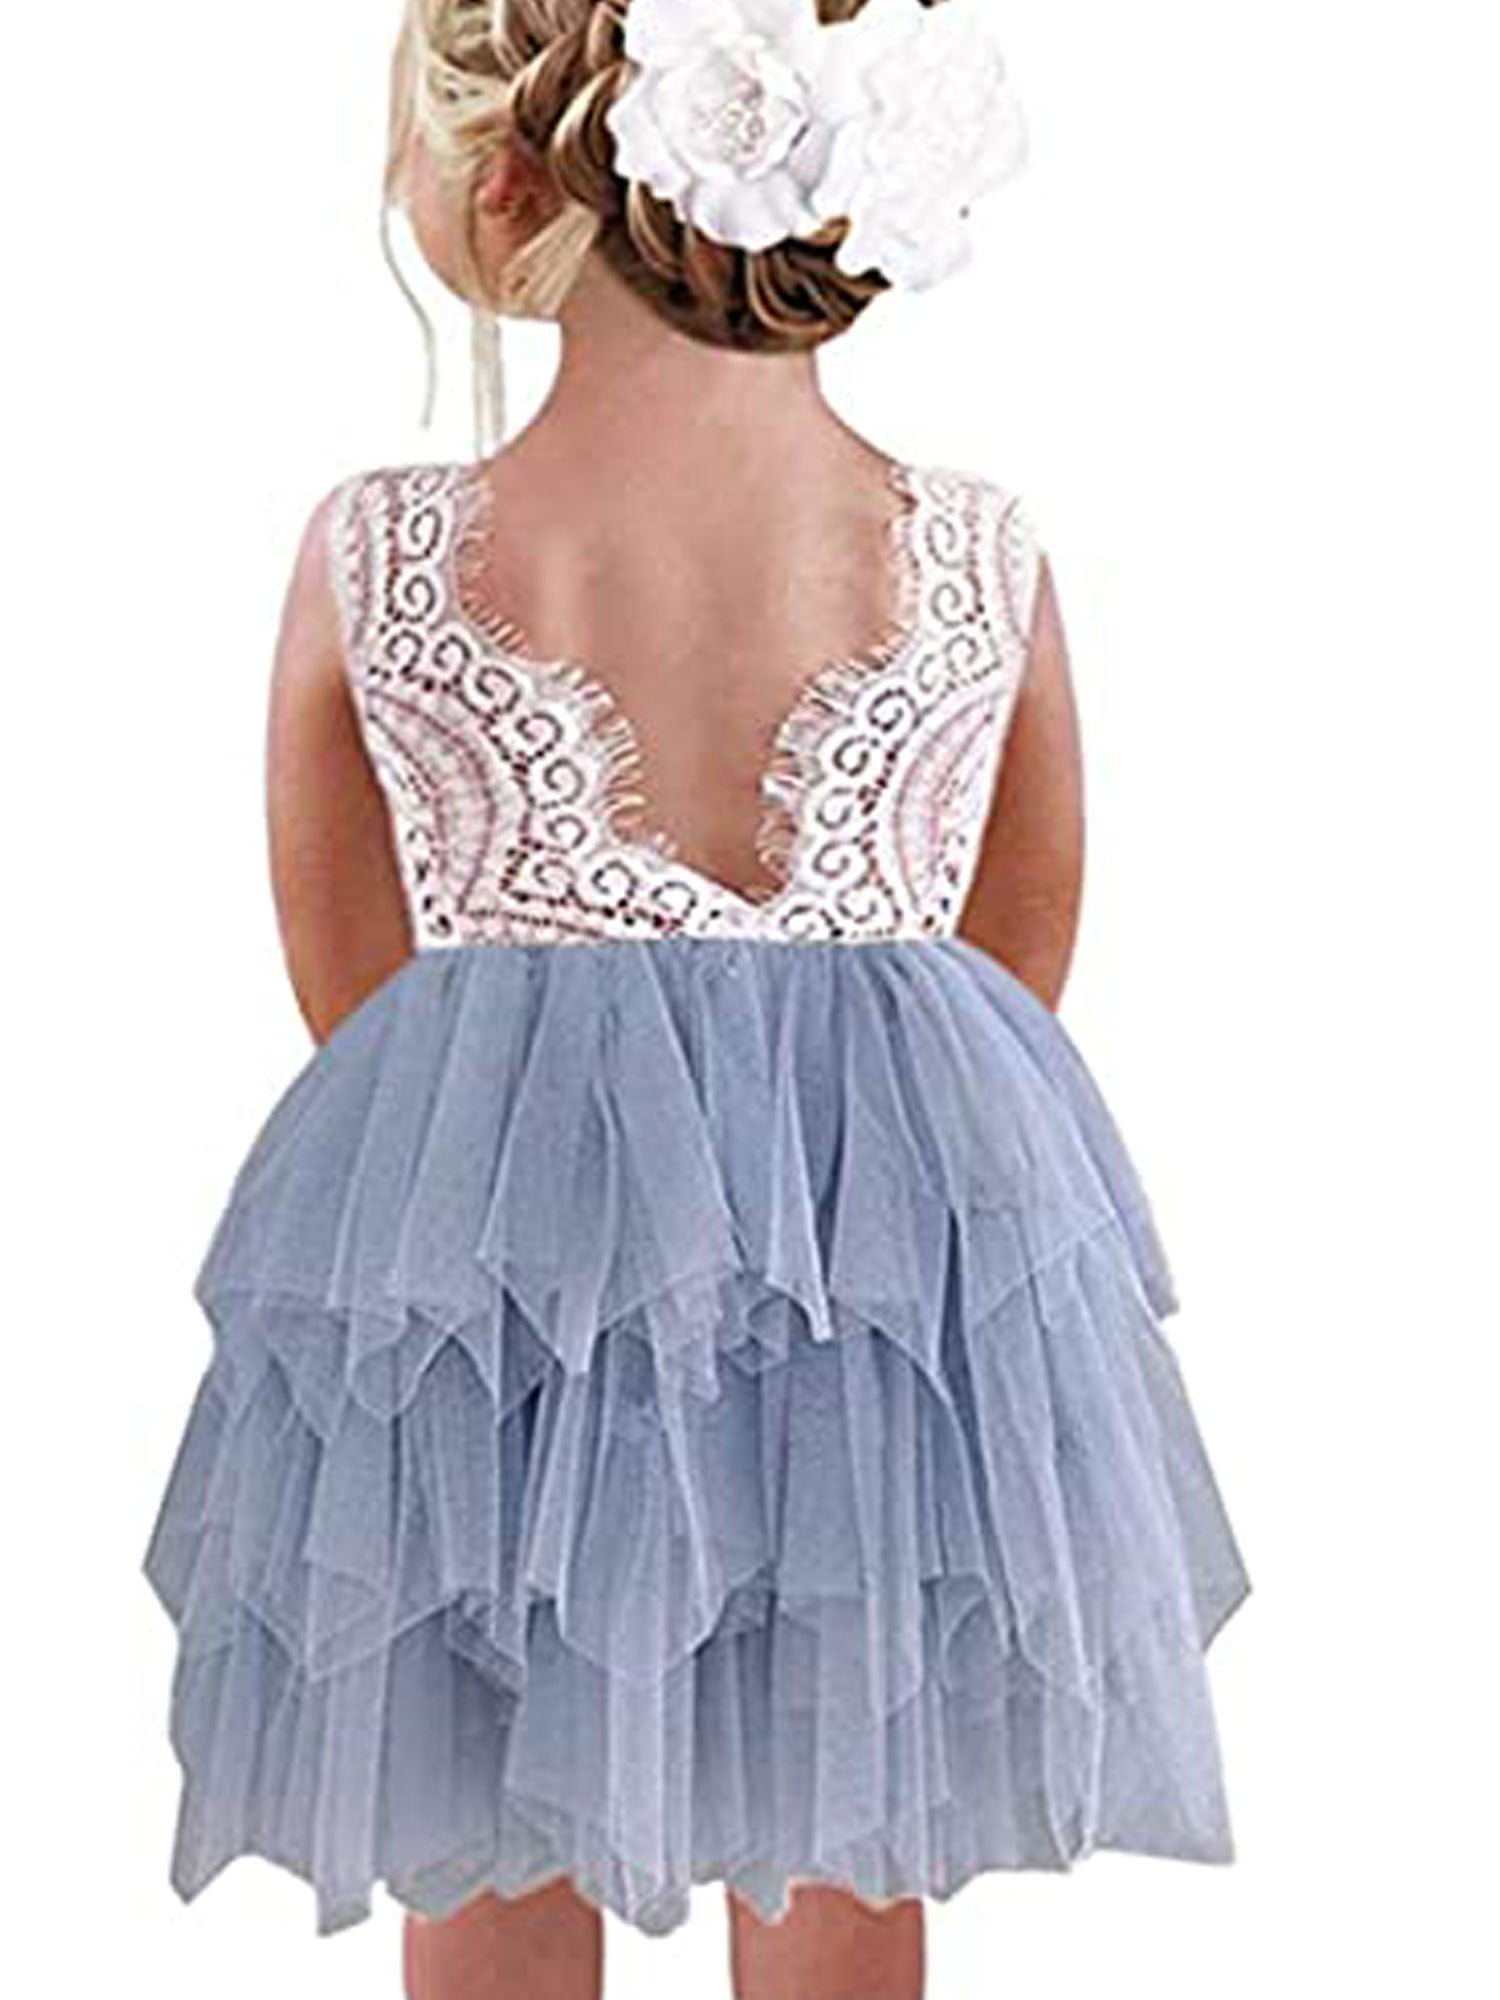 Madjtlqy Baby Girls Lace Mesh Party Tutu Mini Tiered Wedding Formal Dress Kids Toddler Girl Clothing Dress 